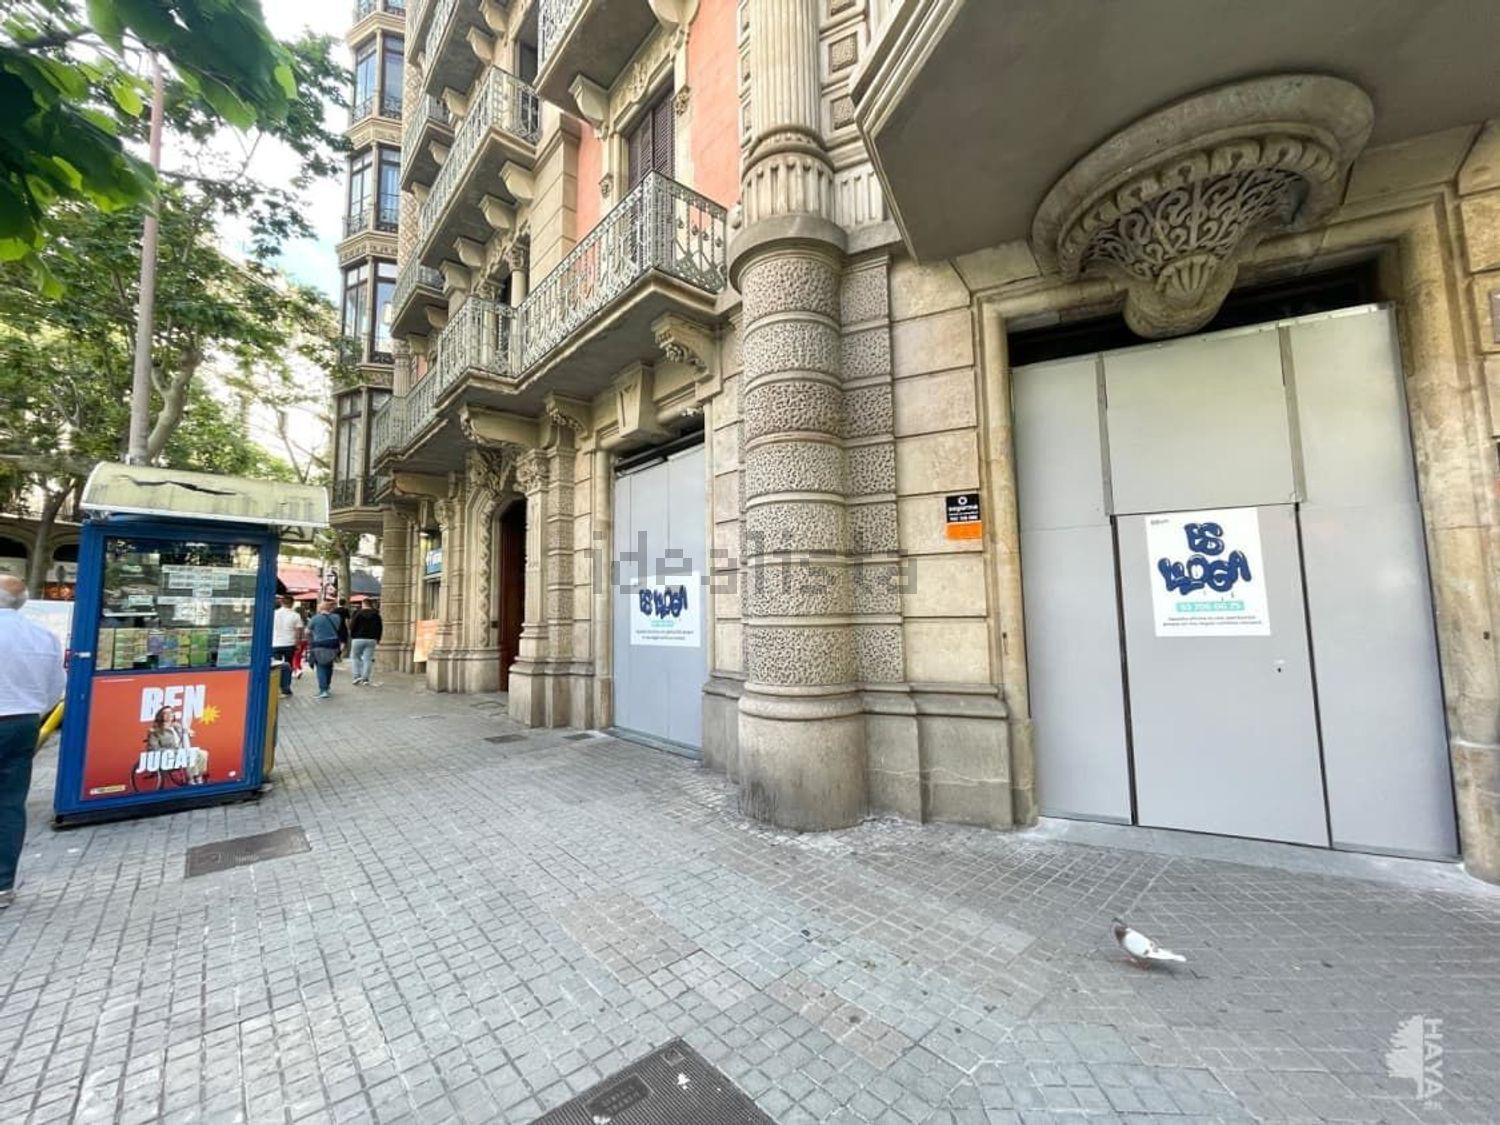 Commercial property for rent in rambla de Catalunya
 
 Local in the city of Barcelona. It is locat - 1